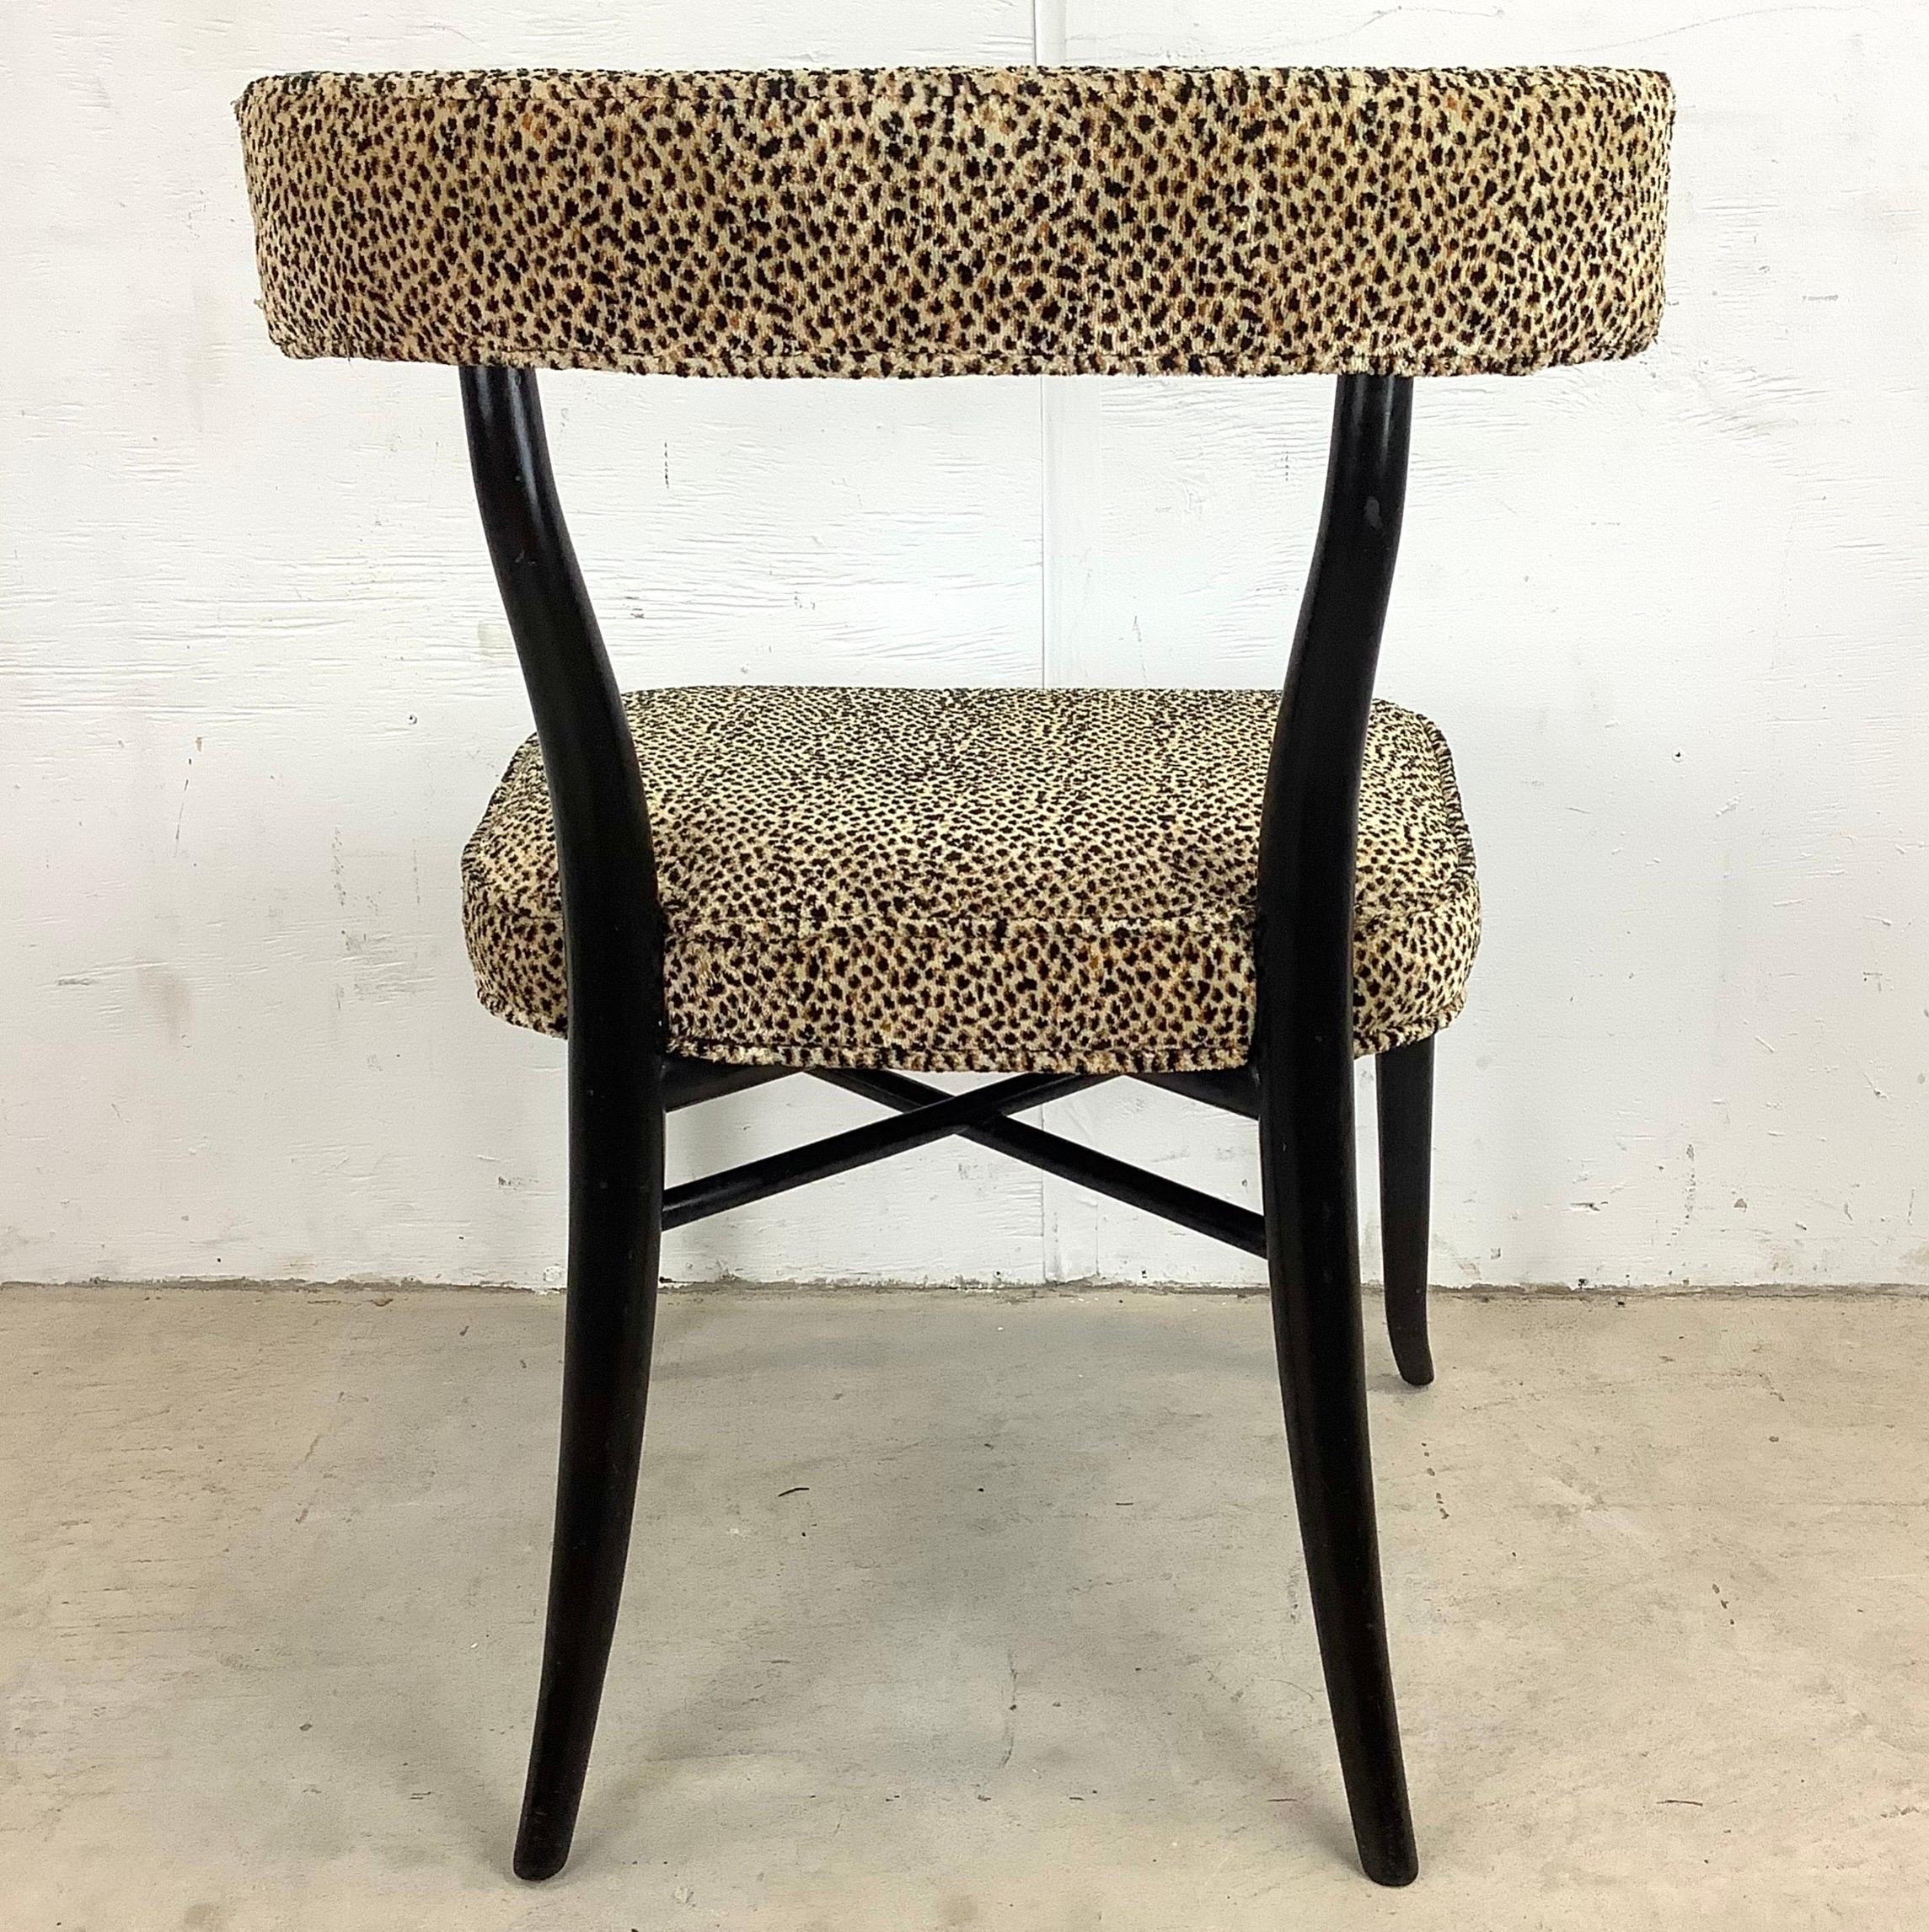 20th Century Vintage Klismos Chair in Leopard Print Attr. to t.h. Robsjohn-Gibbings